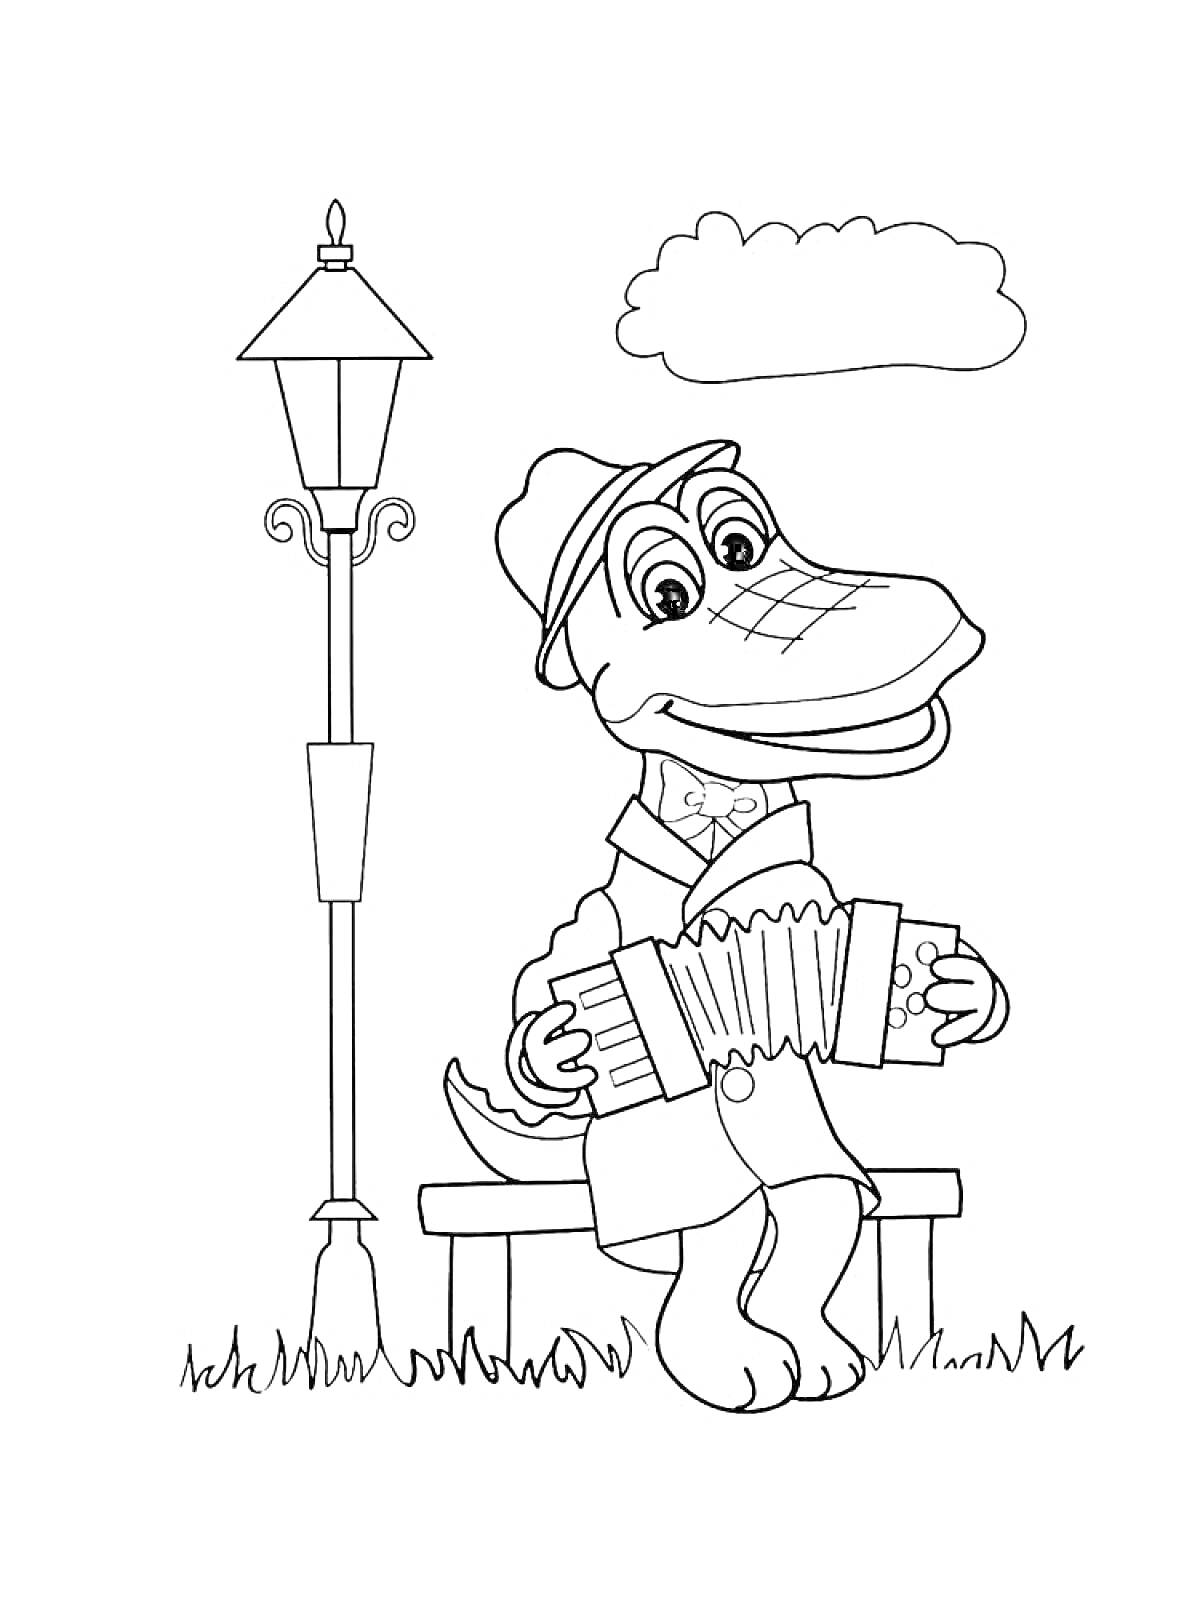 Раскраска Крокодил Гена сидящий на скамейке с аккордеоном, рядом фонарь и облако